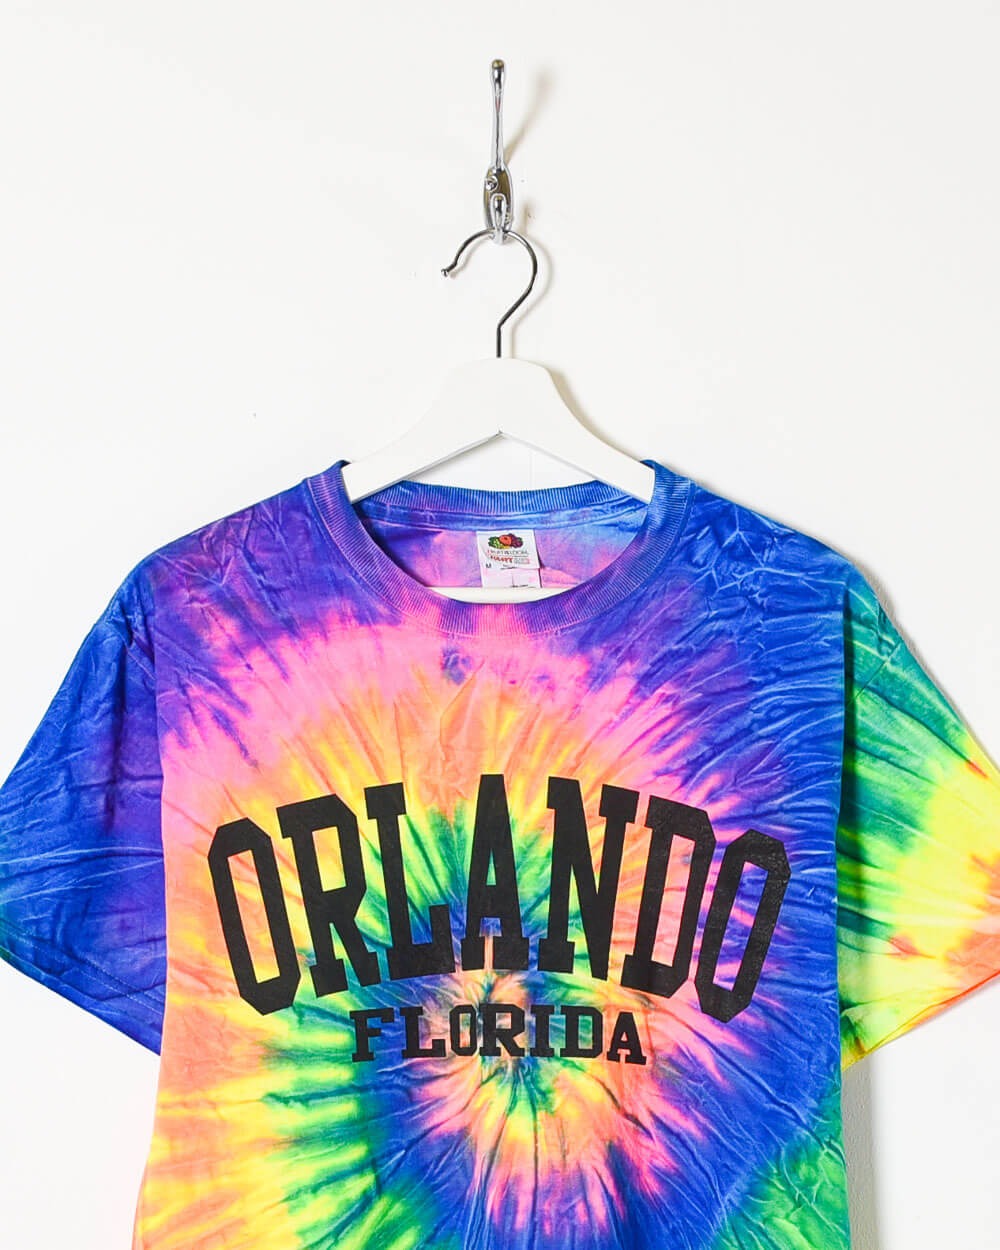 Multi Orlando Florida Tie Dye T-Shirt - Medium